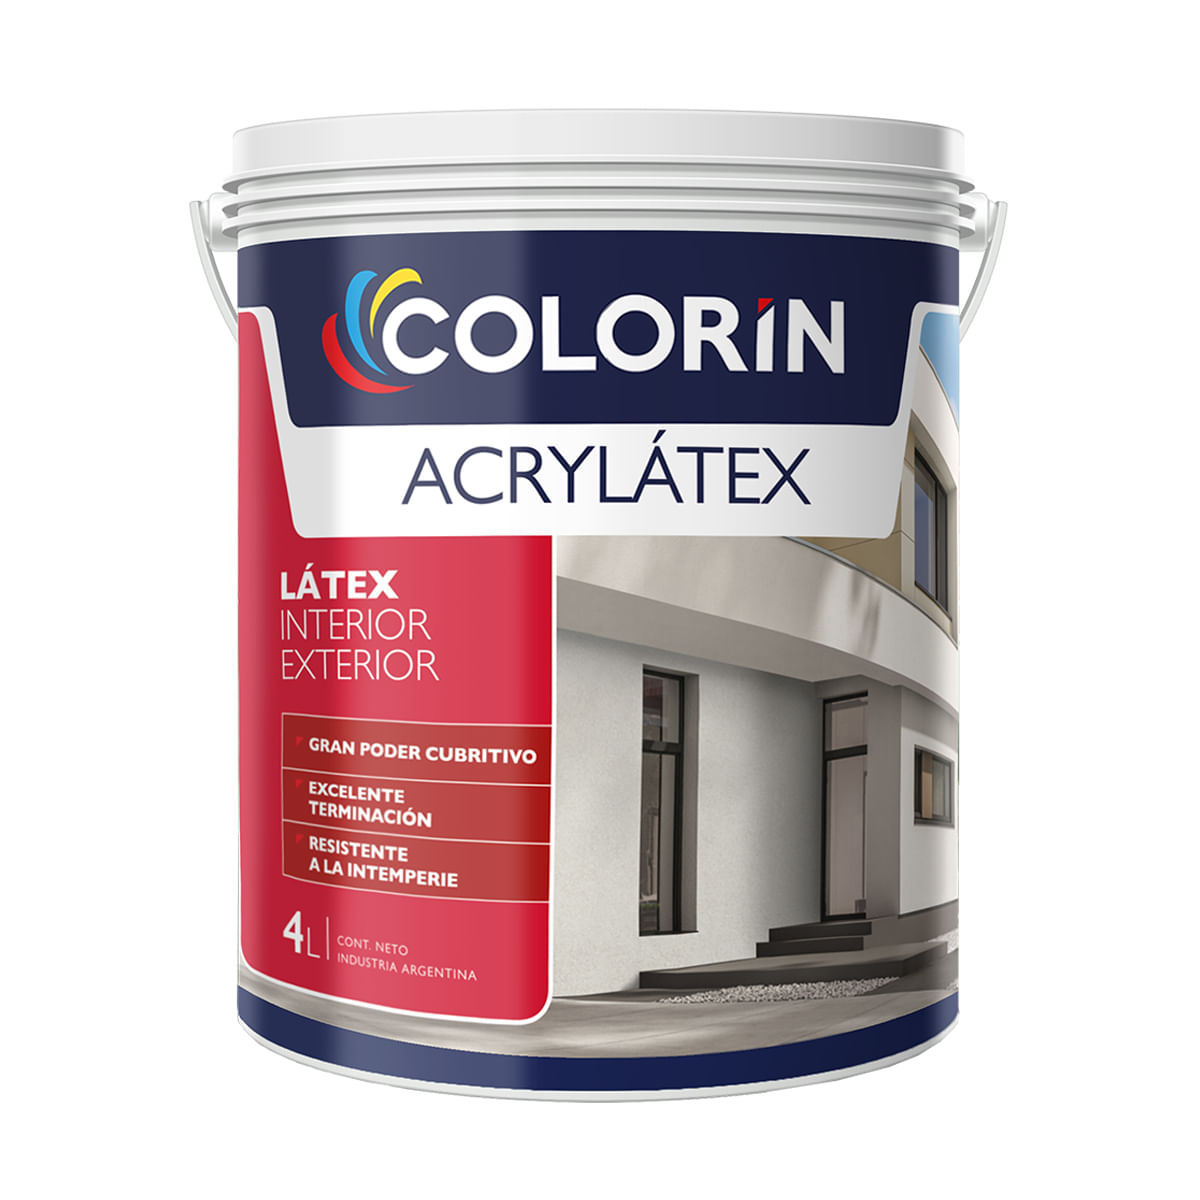 acrylatex-colorin